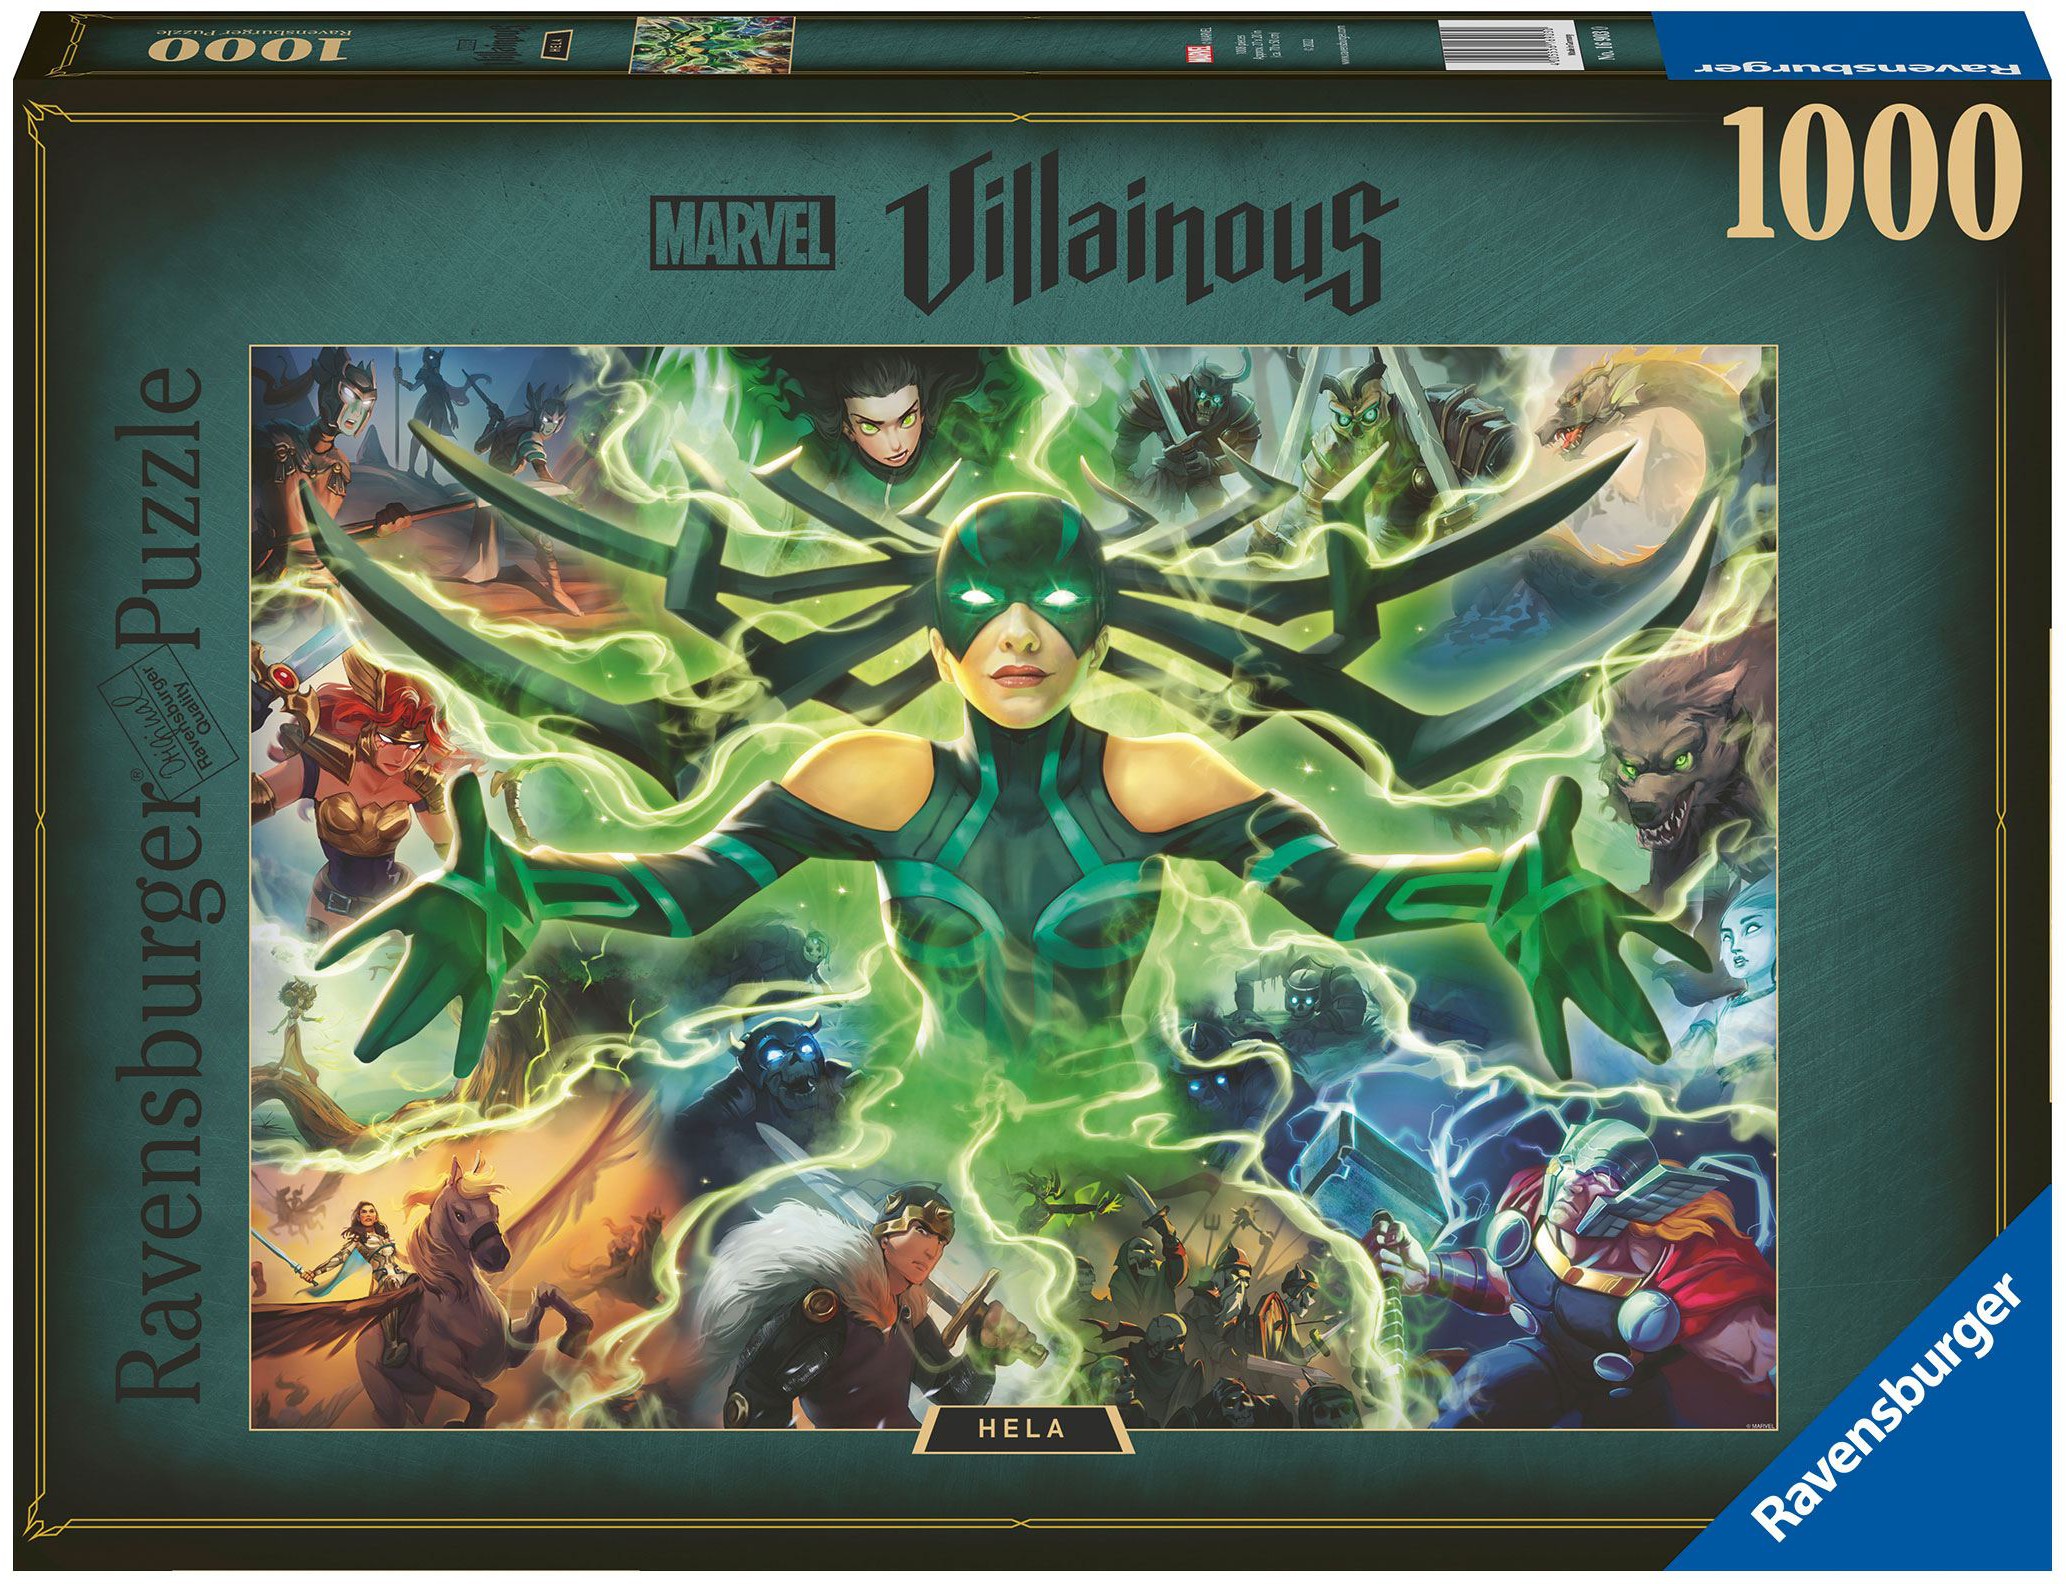 Marvel Villainous - Hela Jigsaw Puzzle (1000 pieces) - Heromic